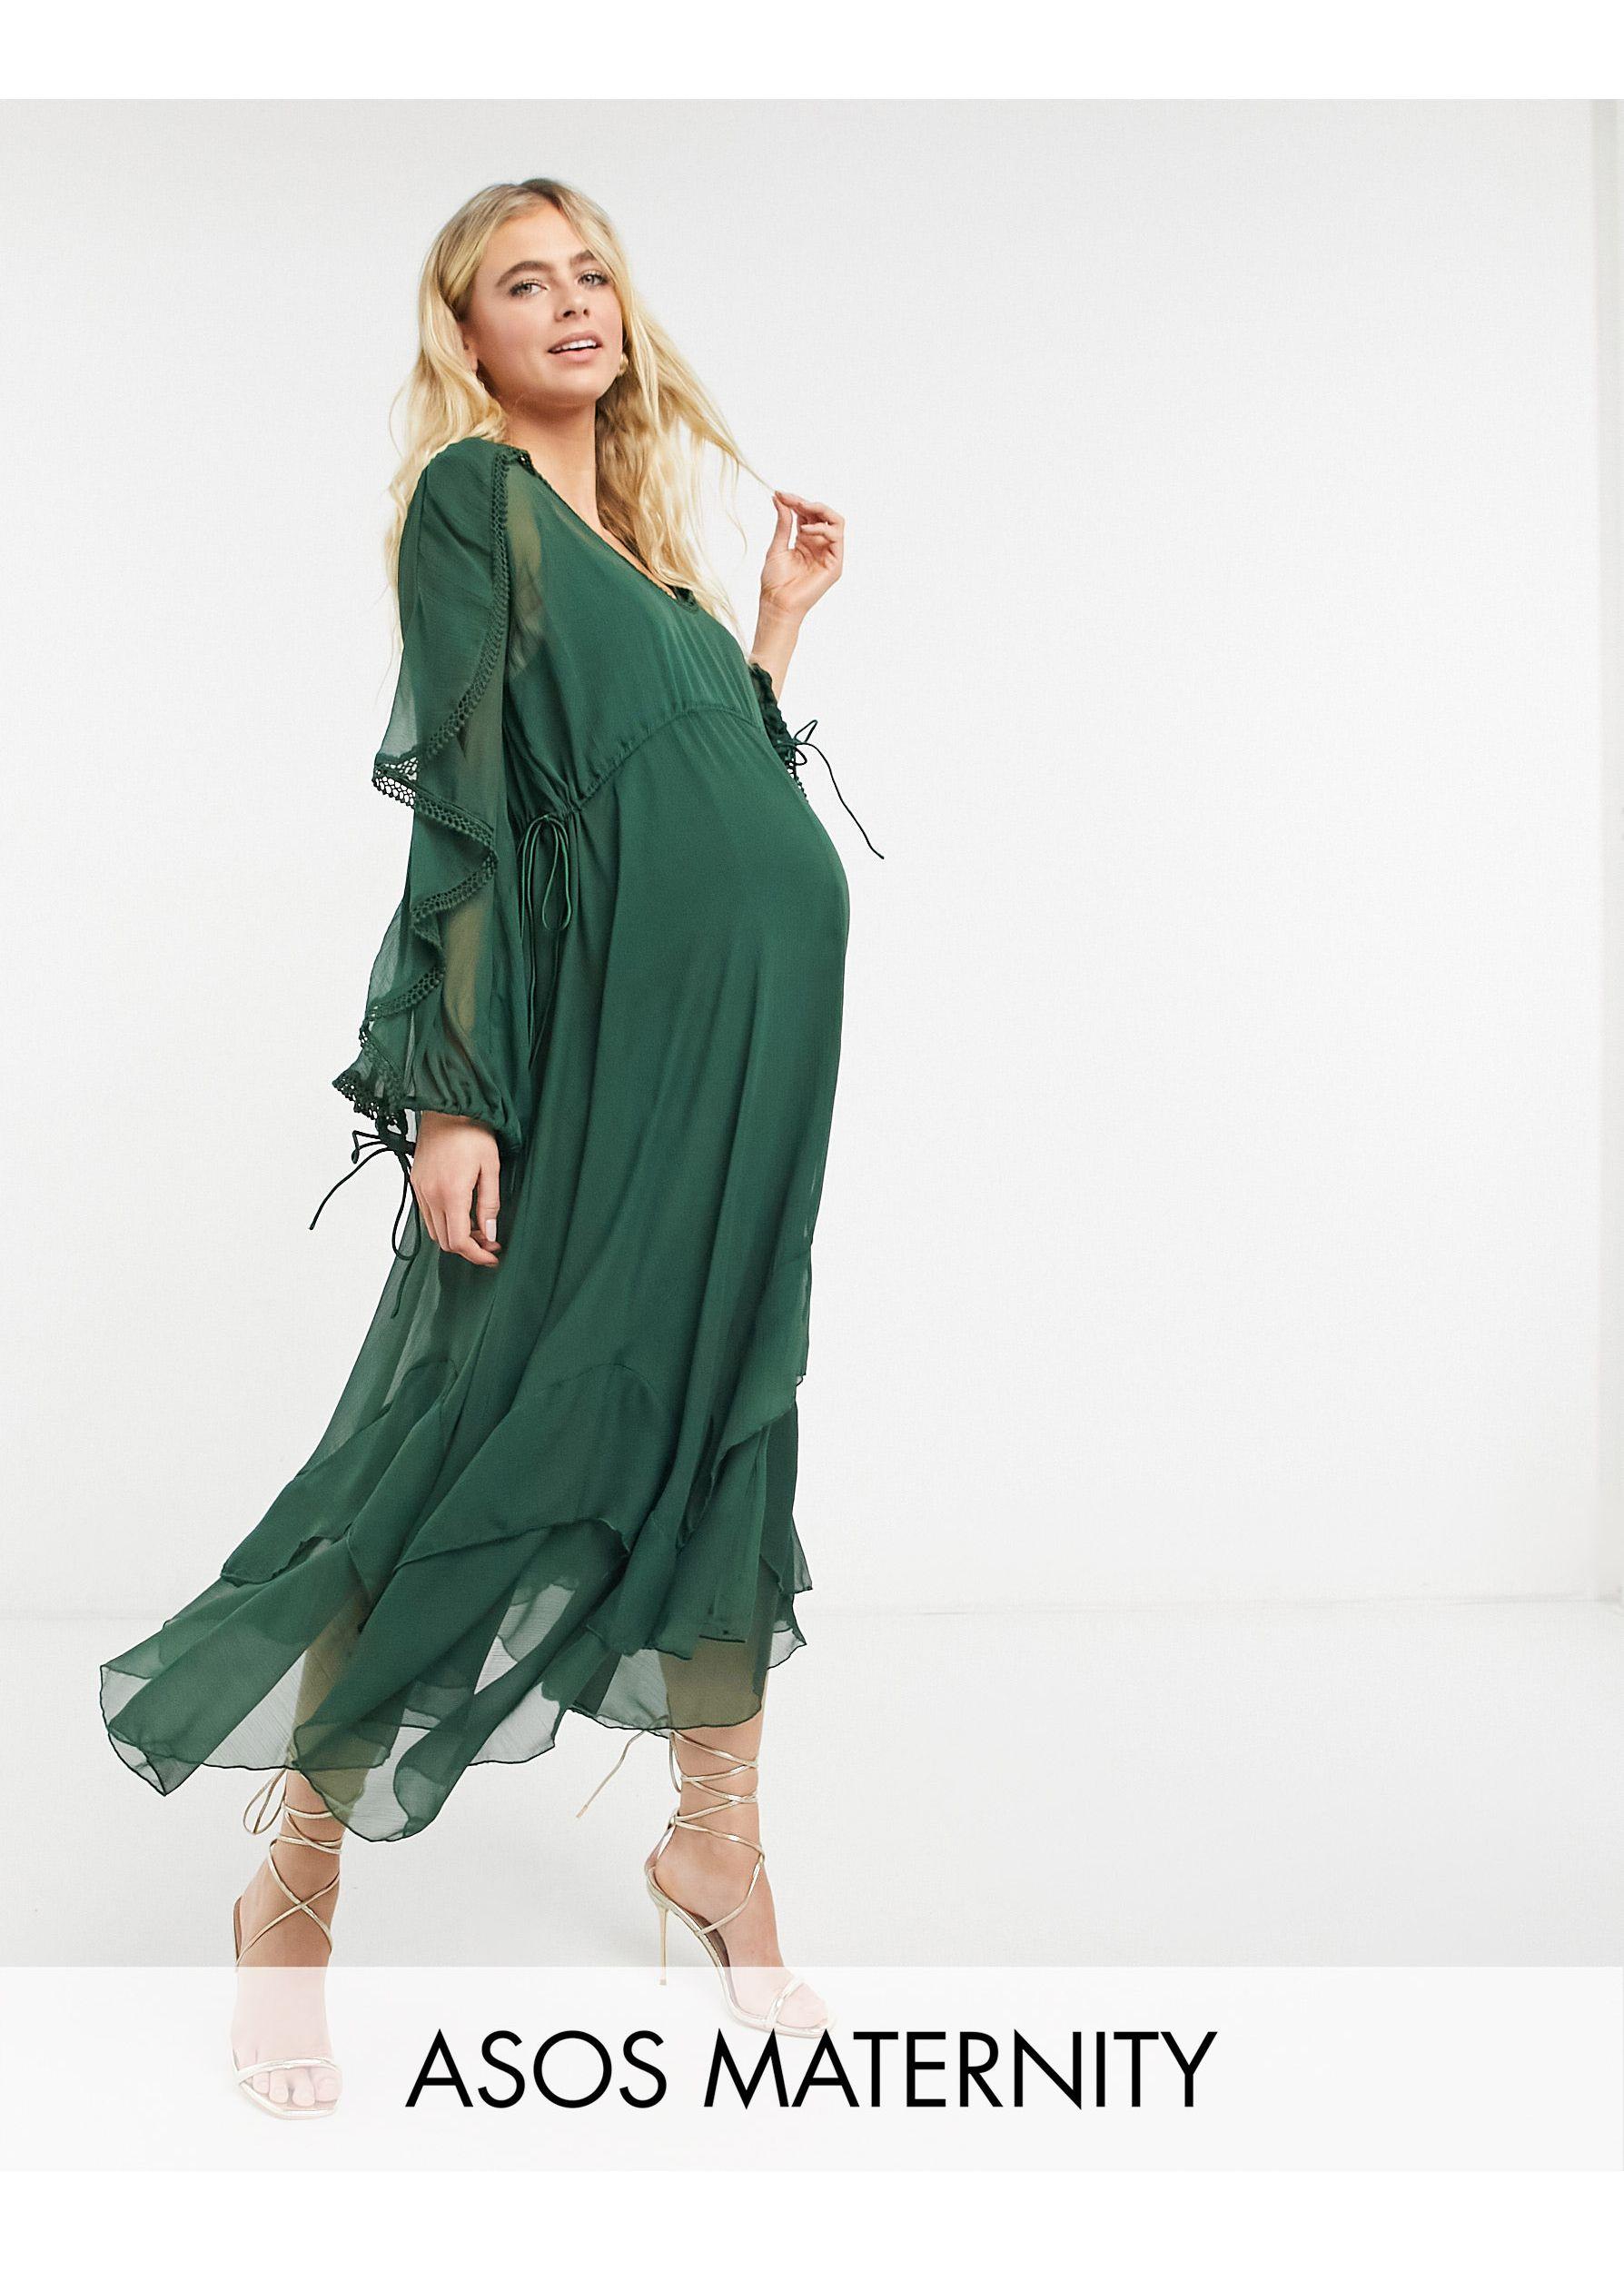 https://cdna.lystit.com/photos/asos/1339d6da/asos-Forest-green-Maternity-Drape-Ruffle-Midi-Dress-With-Lace-Insert-And-Tassel-Detail.jpeg